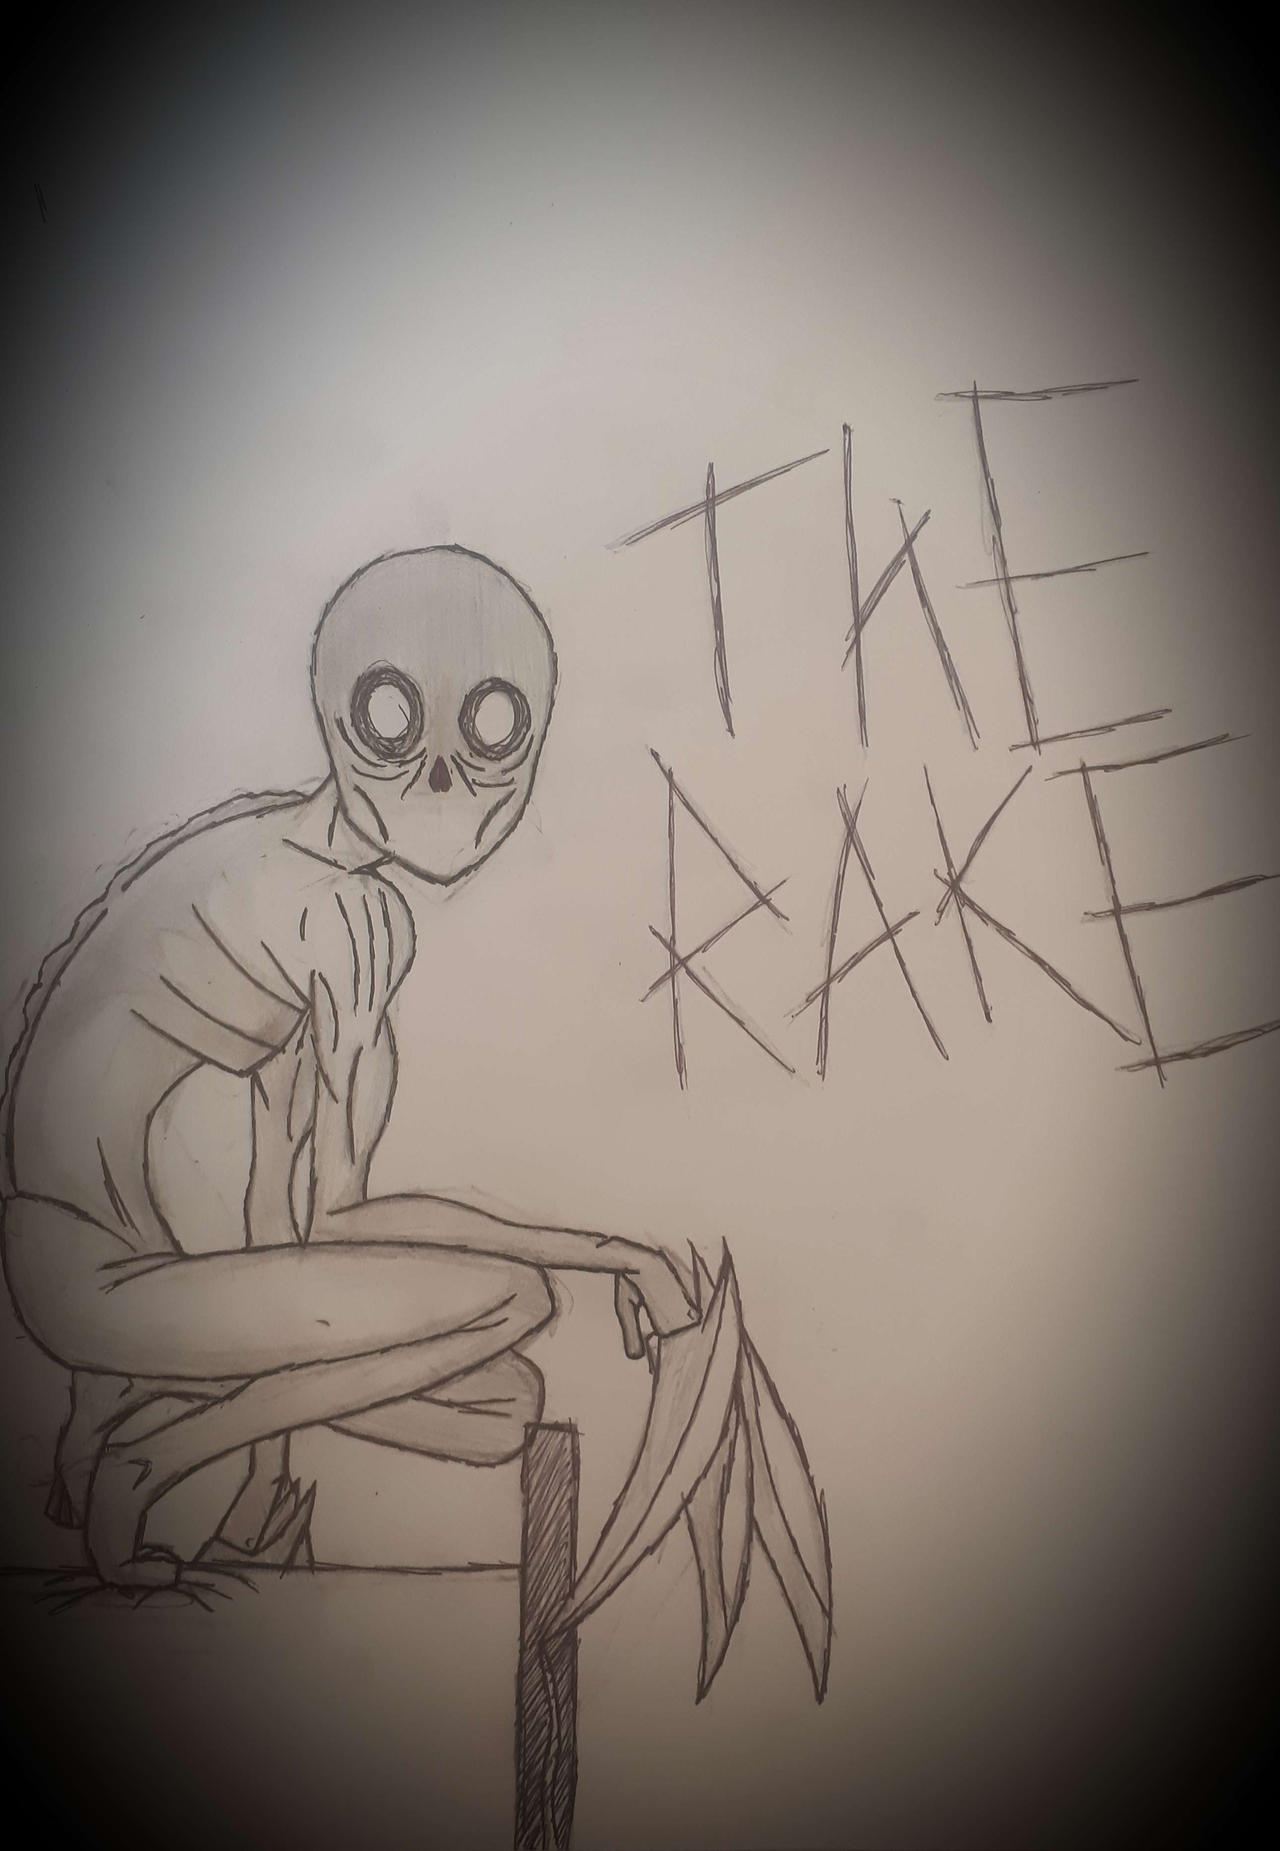 His name is The Rake” (Creepypasta Drawin